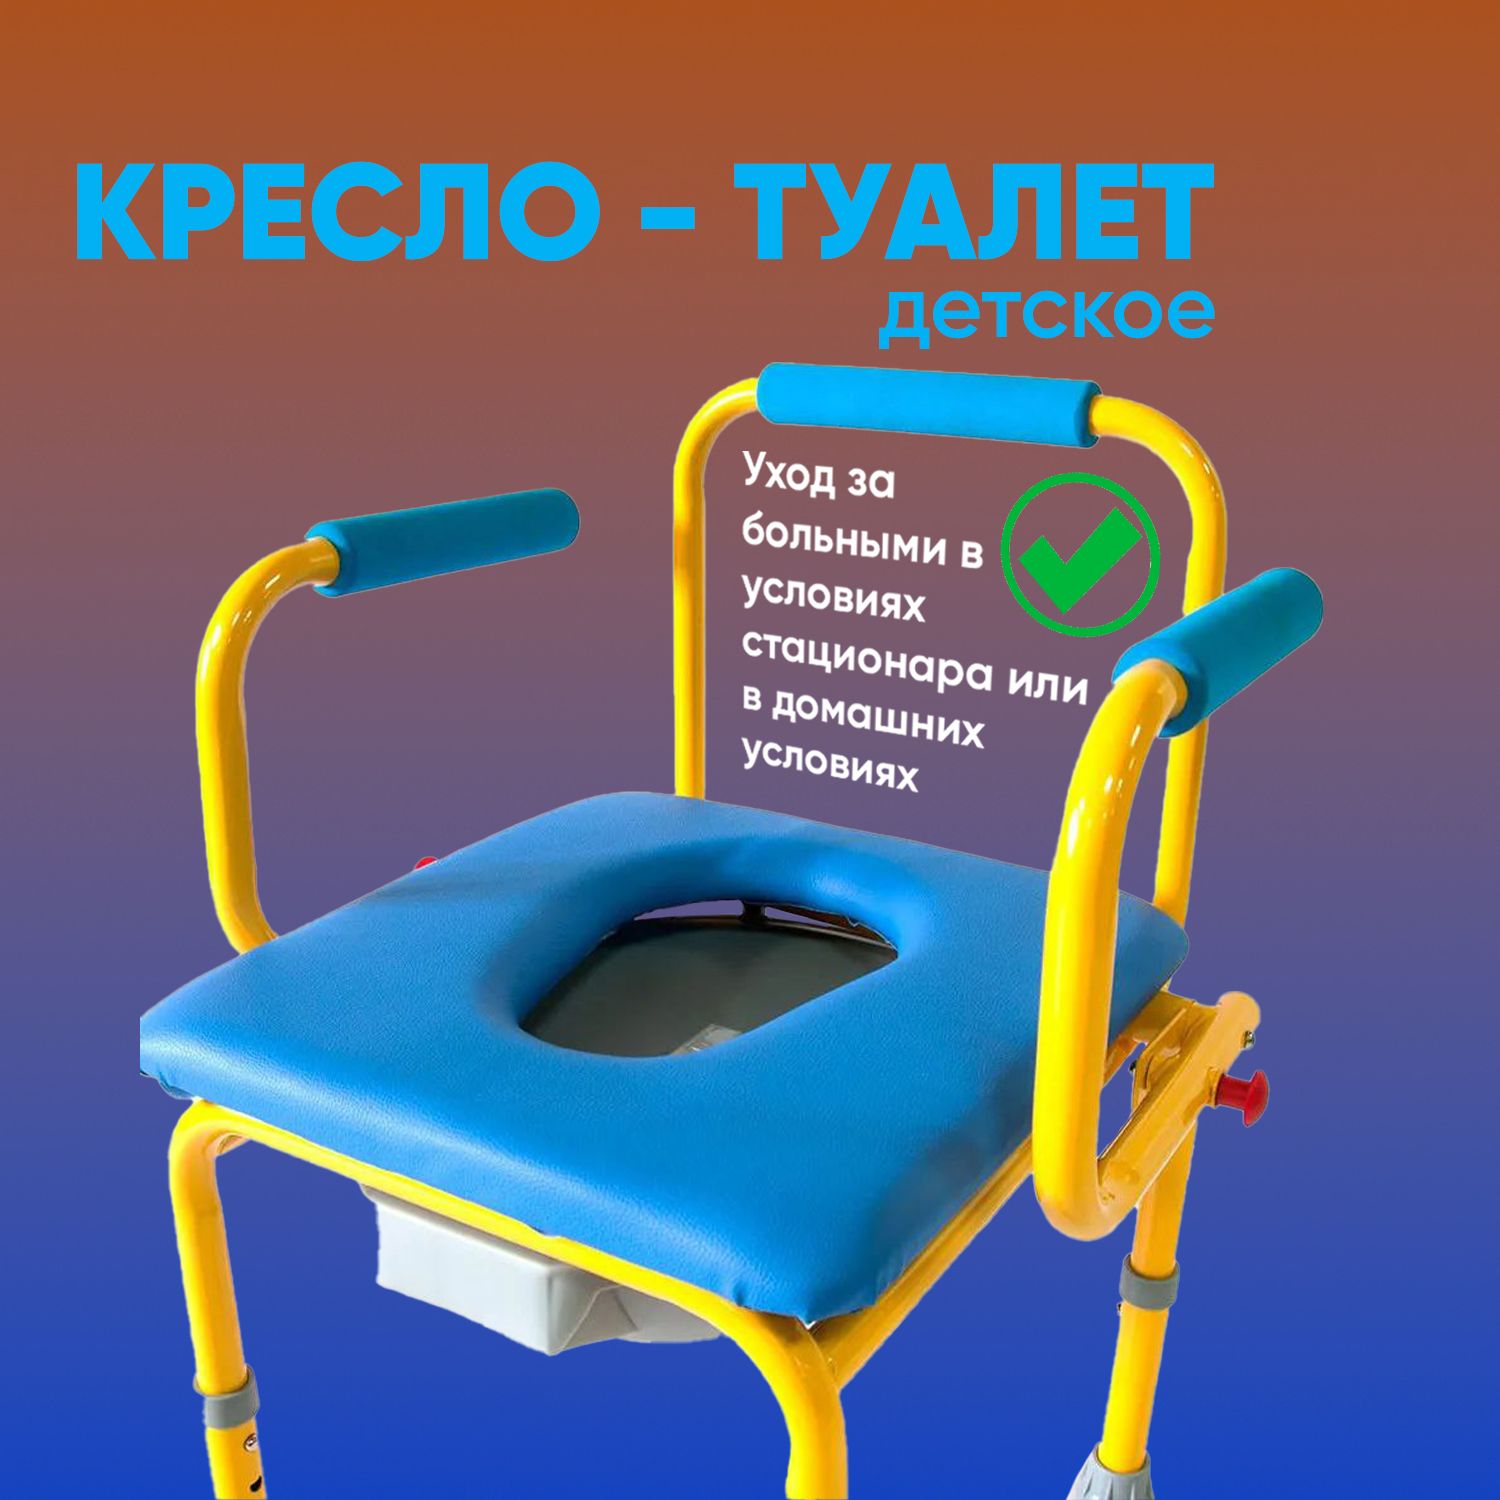 Кресло туалет для инвалидов мега оптим fs895l